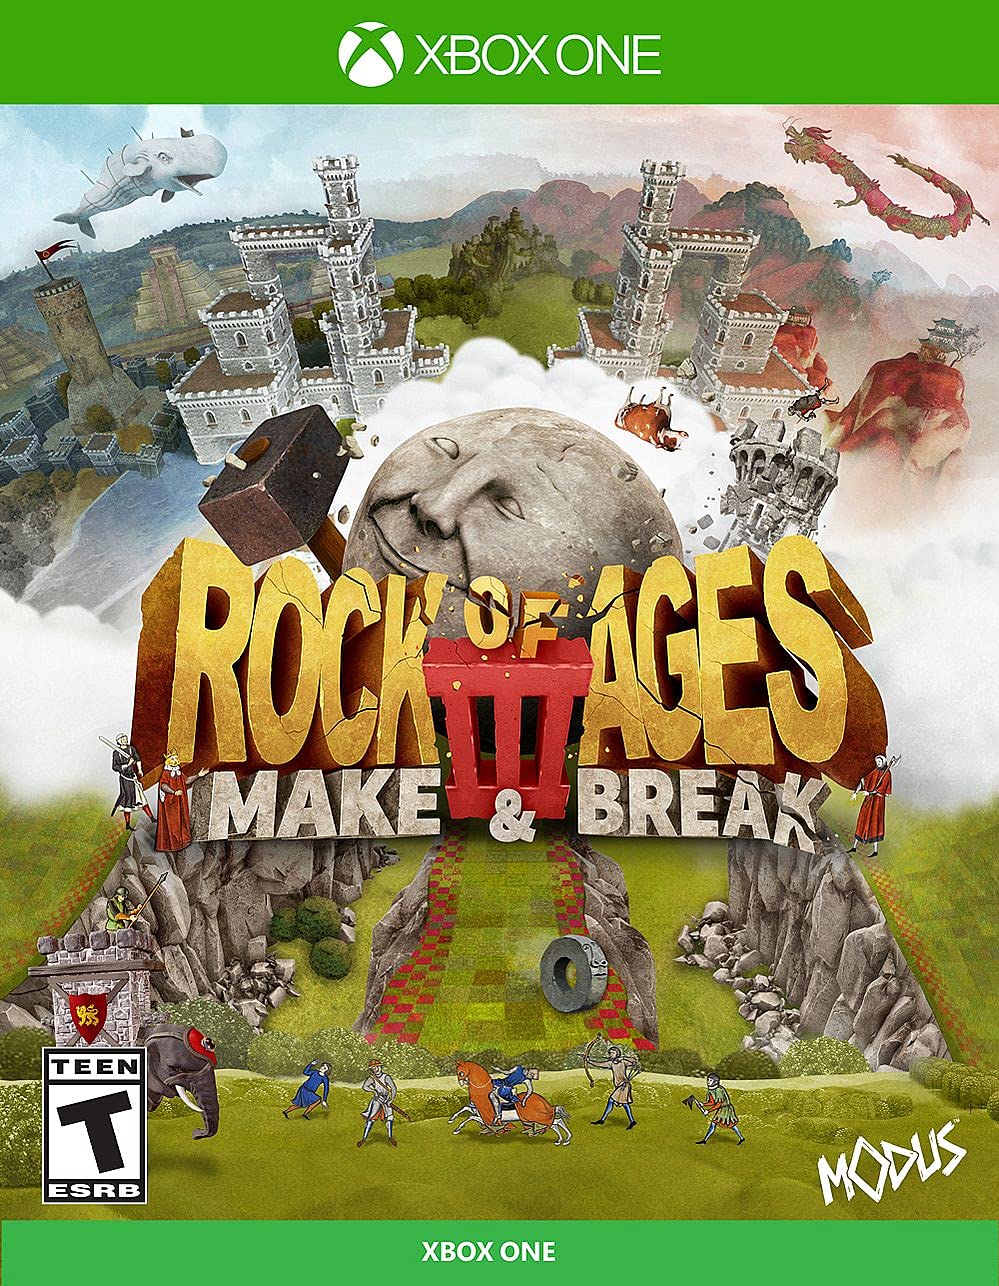 Rock of Ages 3: Make & Break (Xb1) - Xbox One